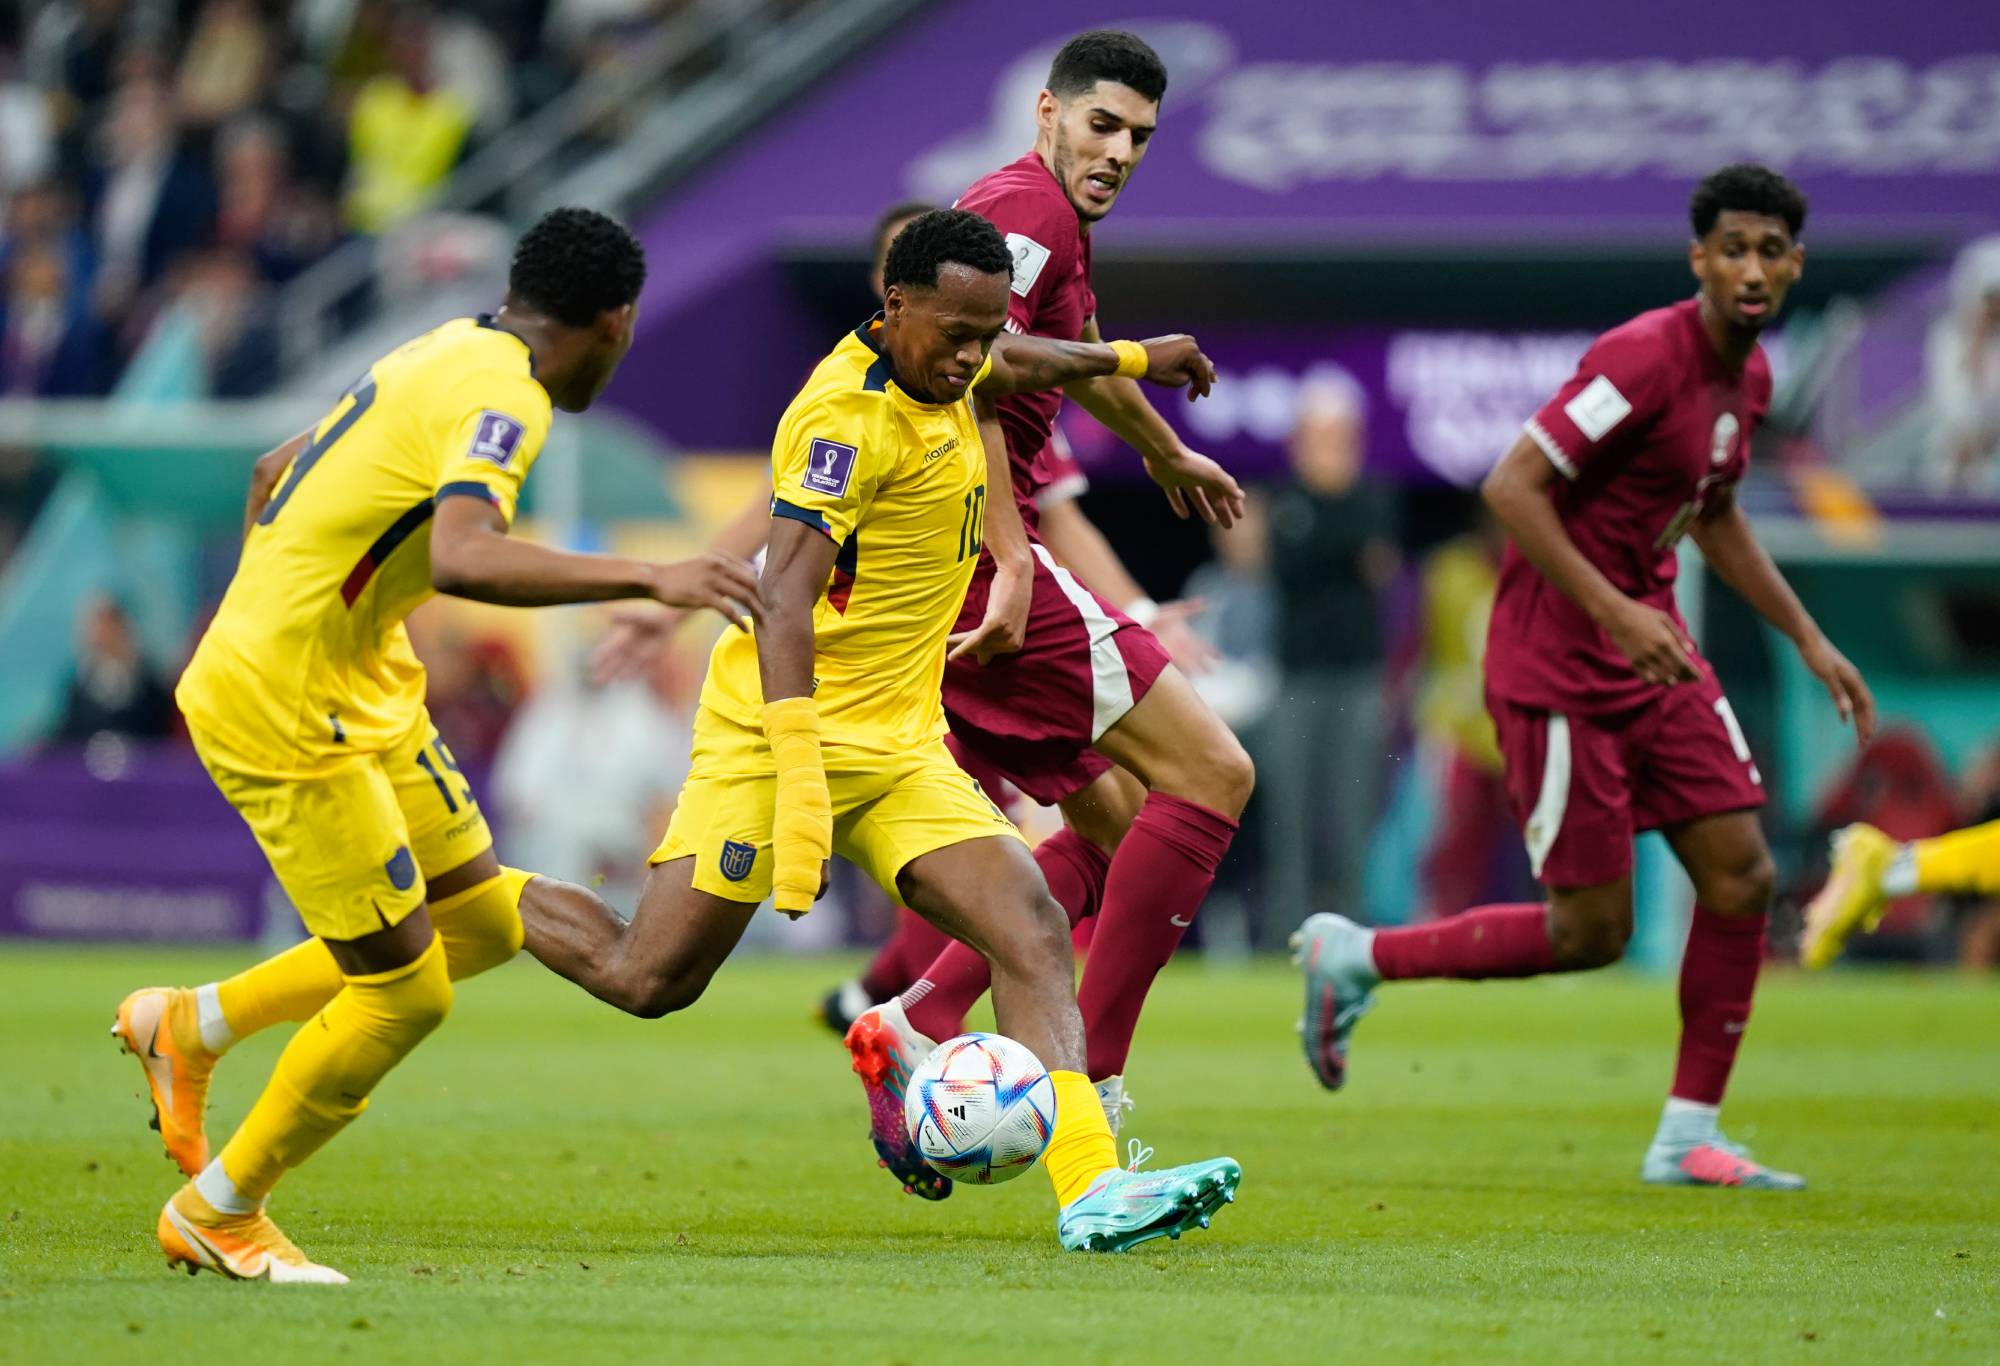 Gelandang Ekuador Romario Ibarra (10) membawa bola ke lapangan melawan Qatar pada pertandingan pembukaan Piala Dunia FIFA 2022 di Stadion Al Bayt di Doha, Qatar pada 20 November 2022. (Foto oleh Jabin Botsford/The Washington Post via Getty Images )